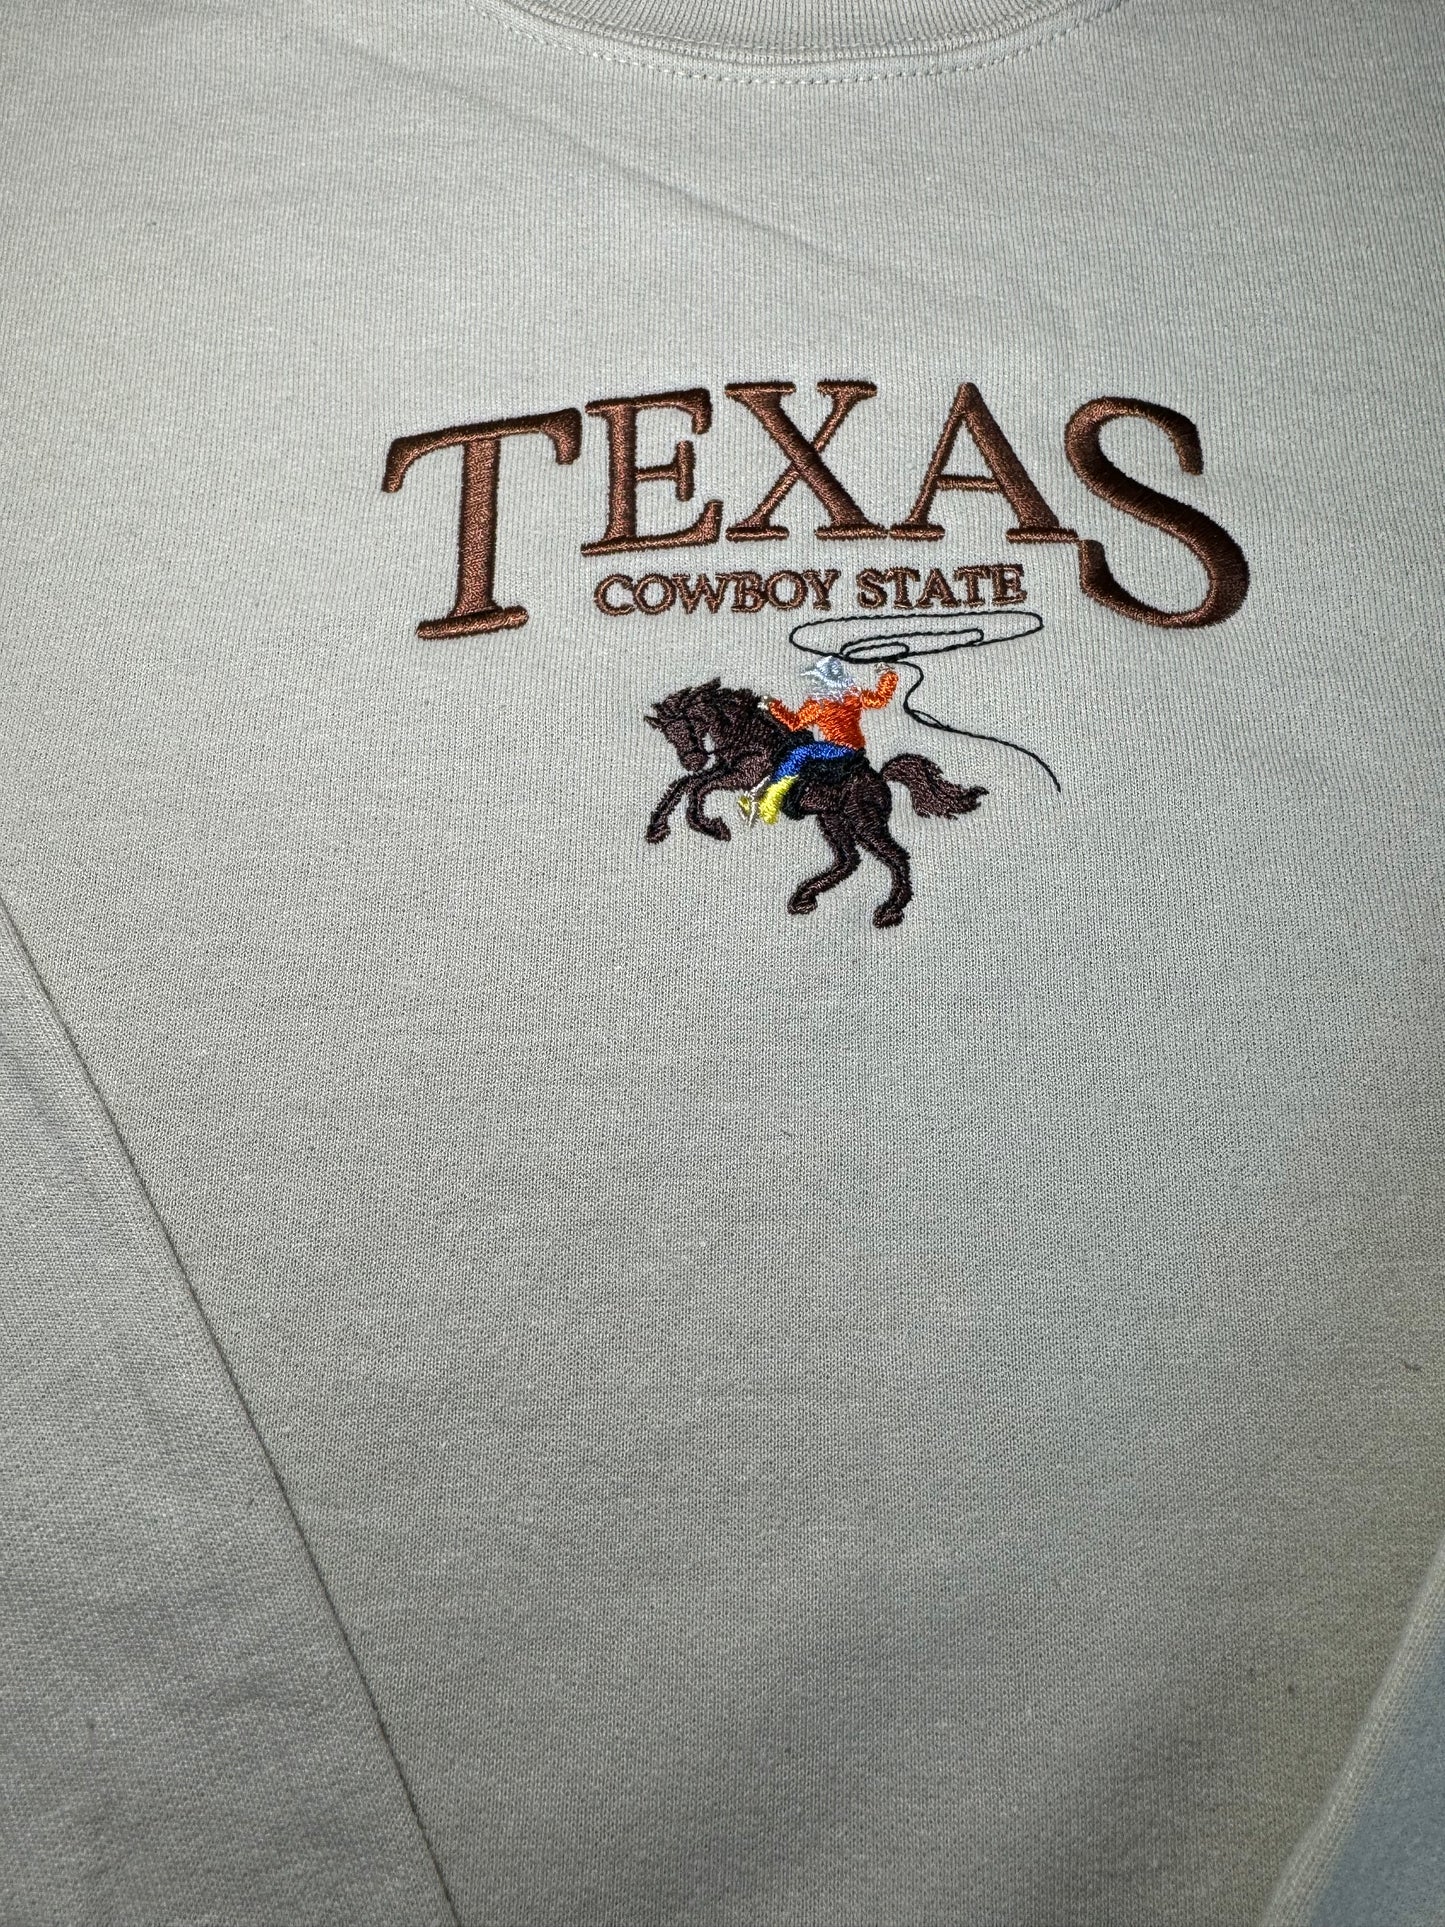 Texas The Cowboy State Crewneck